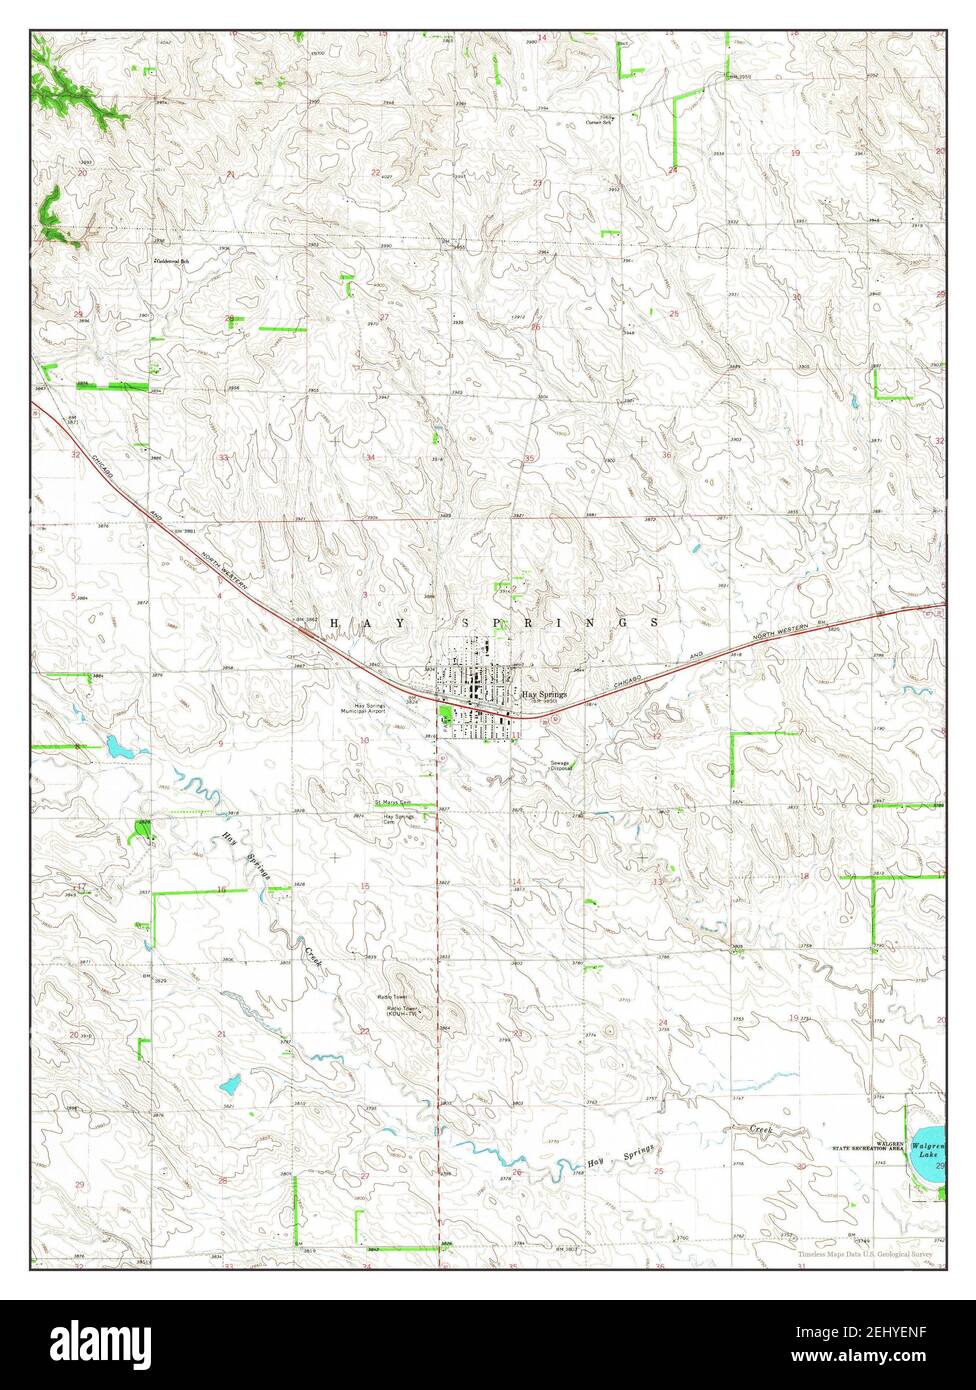 Hay Springs Nebraska Map 1966 124000 United States Of America By Timeless Maps Data Us Geological Survey 2EHYENF 